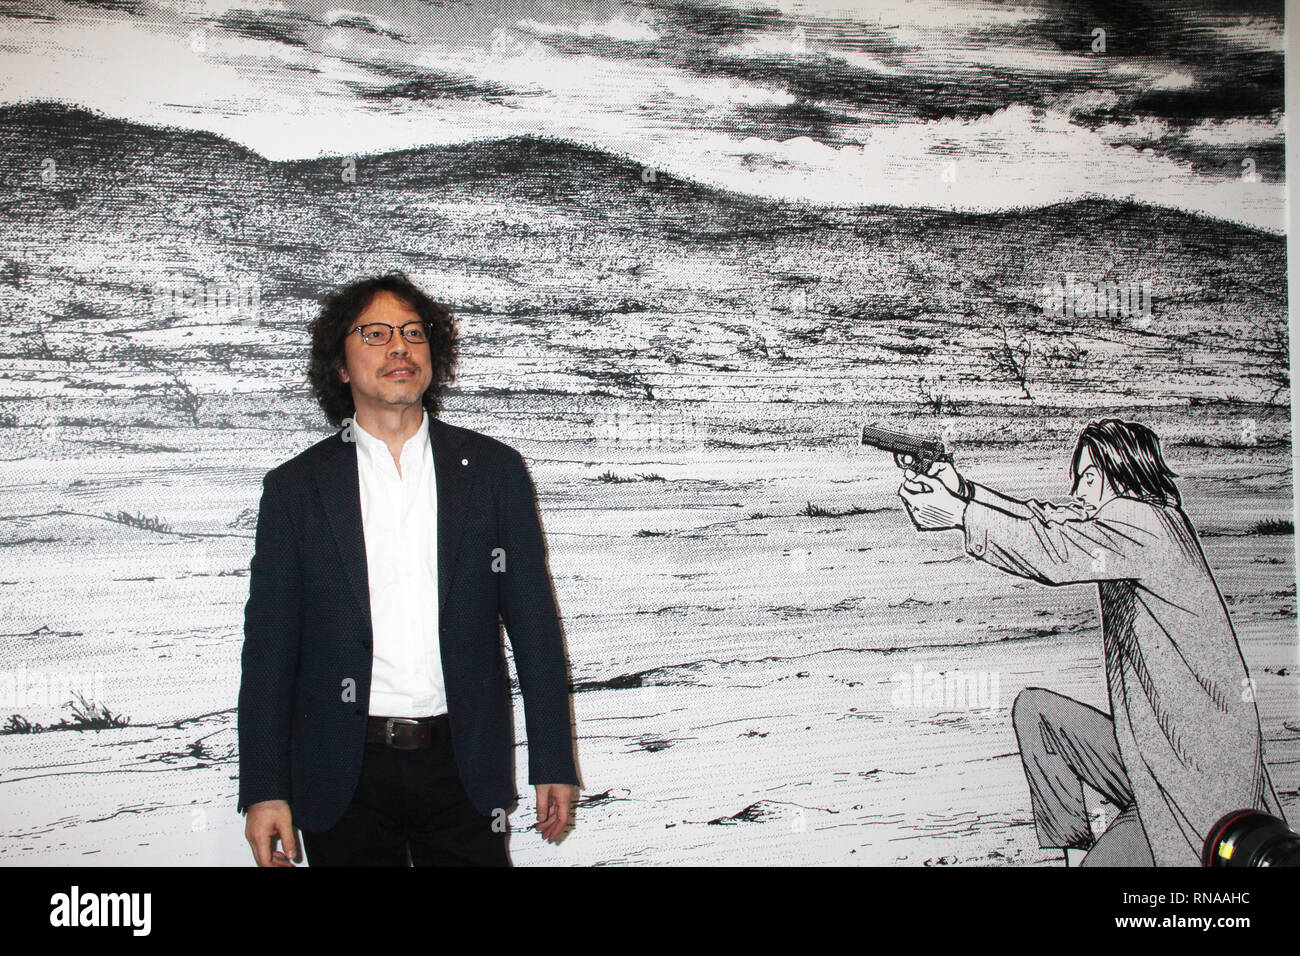 Naoki Urasawa 01/22/2019 'C'est Manga - l'Art de Naoki Urasawa' une séance tenue au Japon House Los Angeles à Los Angeles, CA Photo : Cronos/Hollywood News Banque D'Images